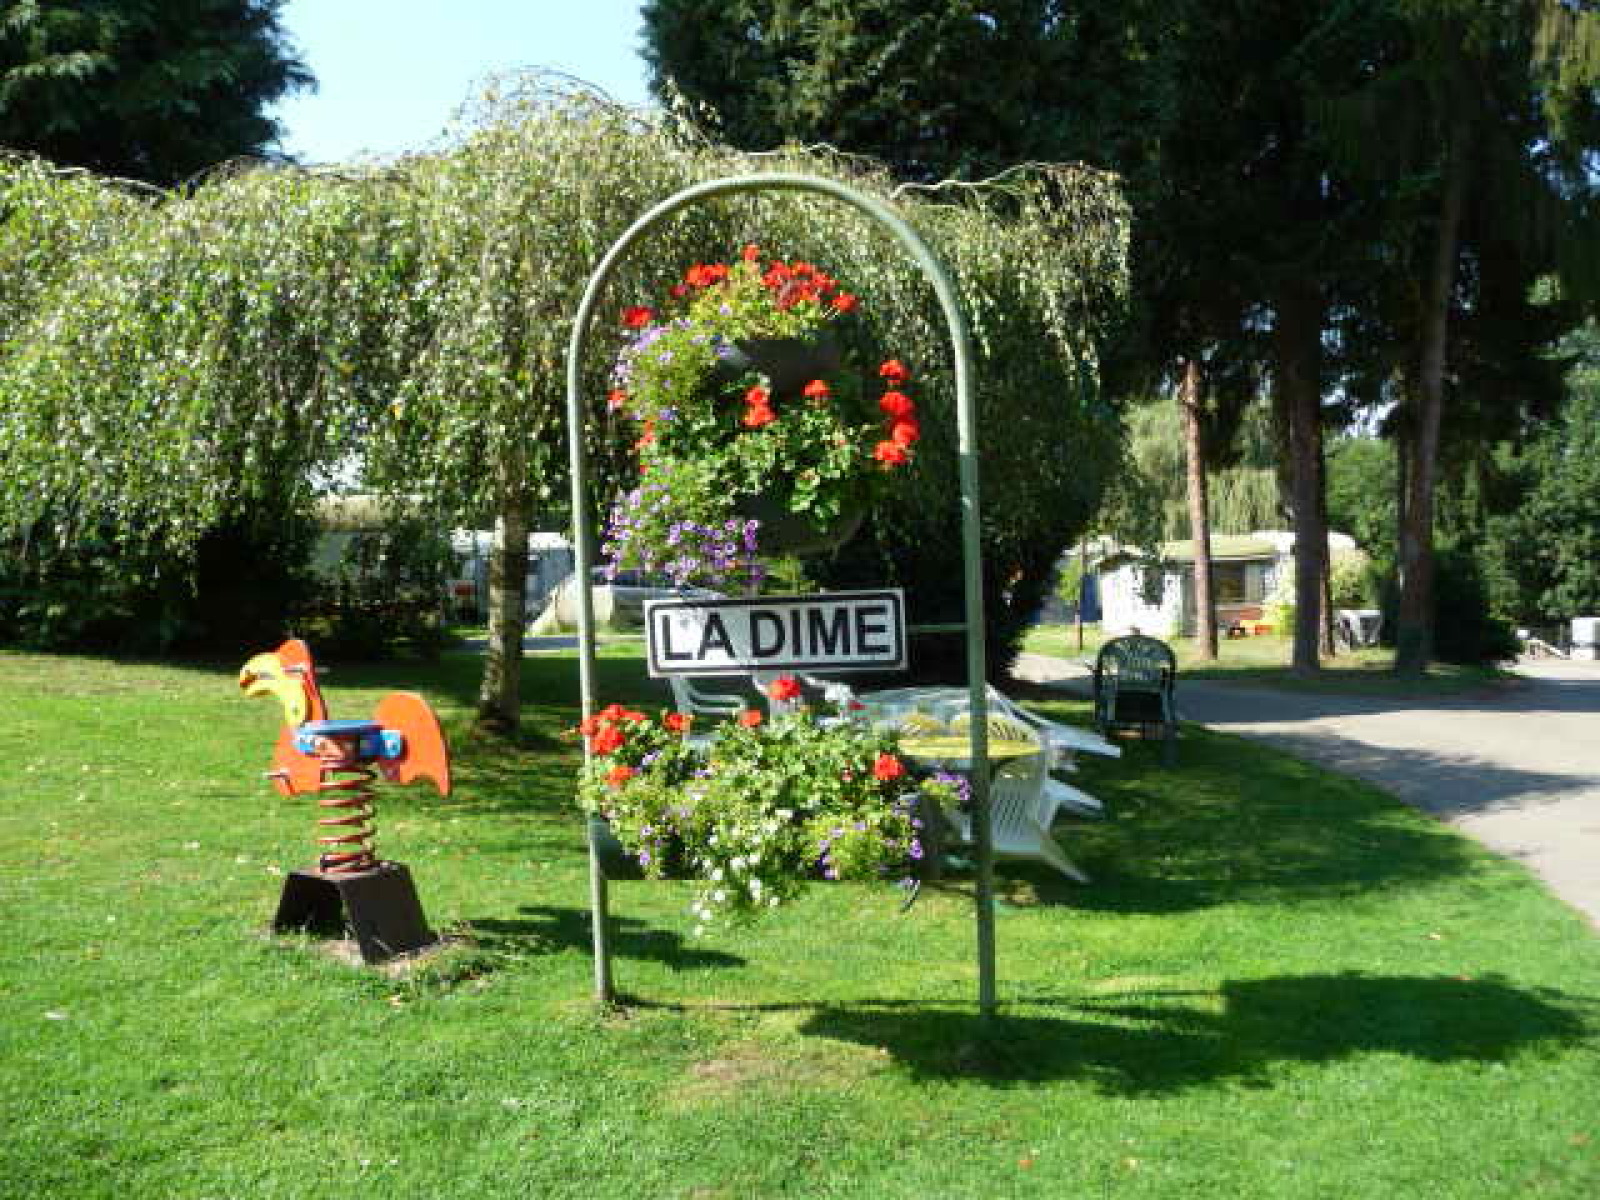 Reception portico of La Dîme campsite in Écaussinnes